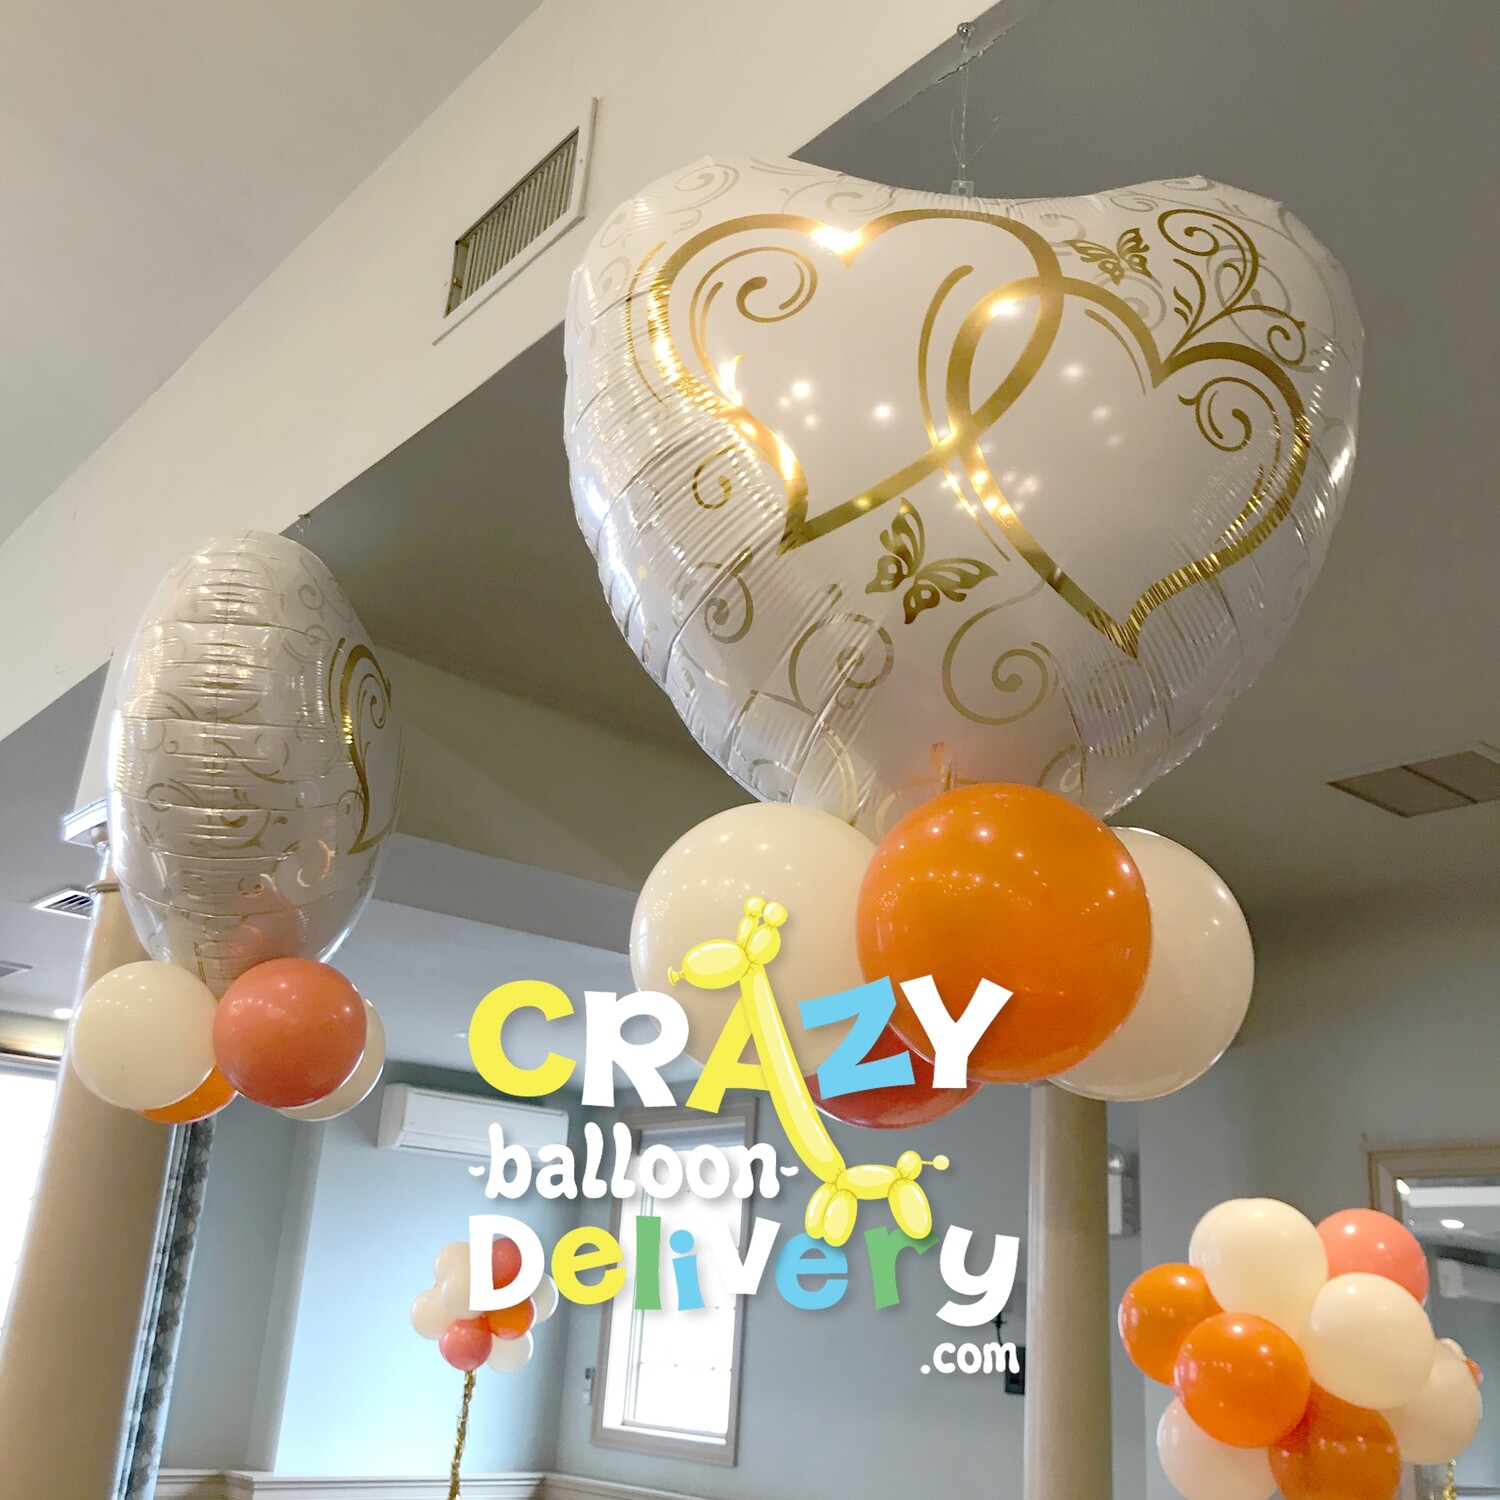 Balloon heart chandeliers